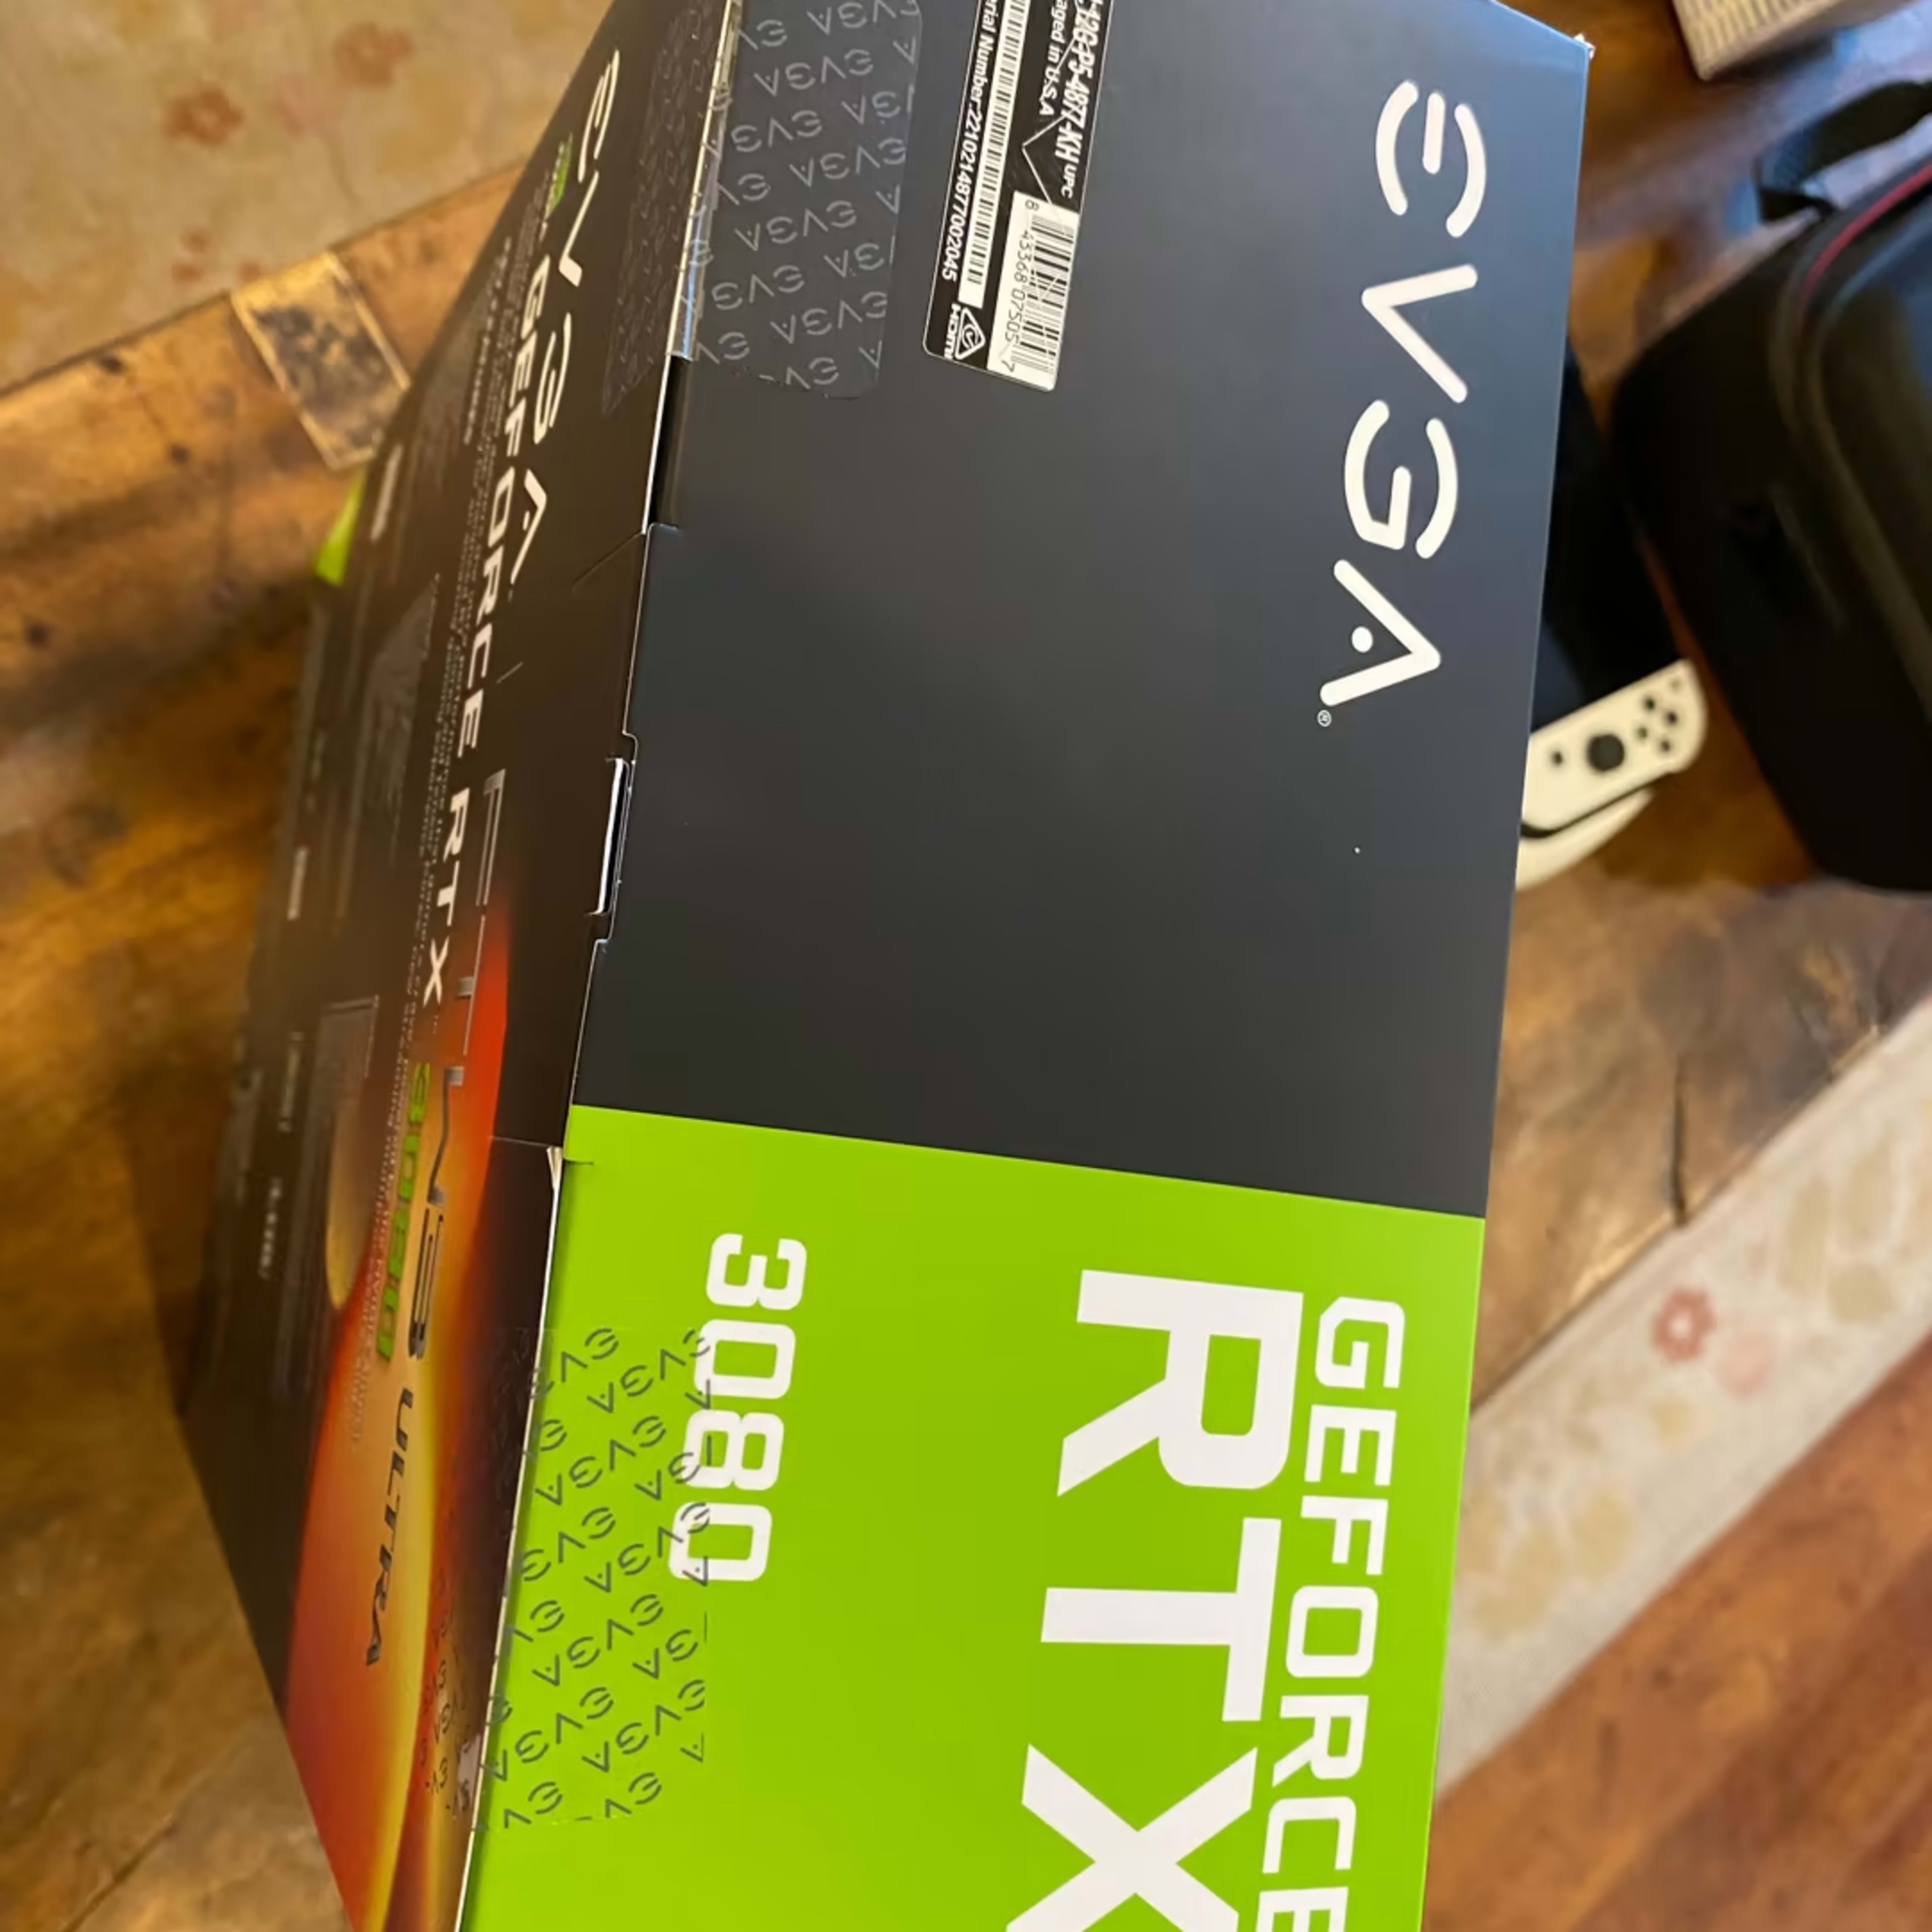 EVGA GeForce RTX 3080 (12GB GDDR6X) FTW3 Ultra - Brand New Sealed